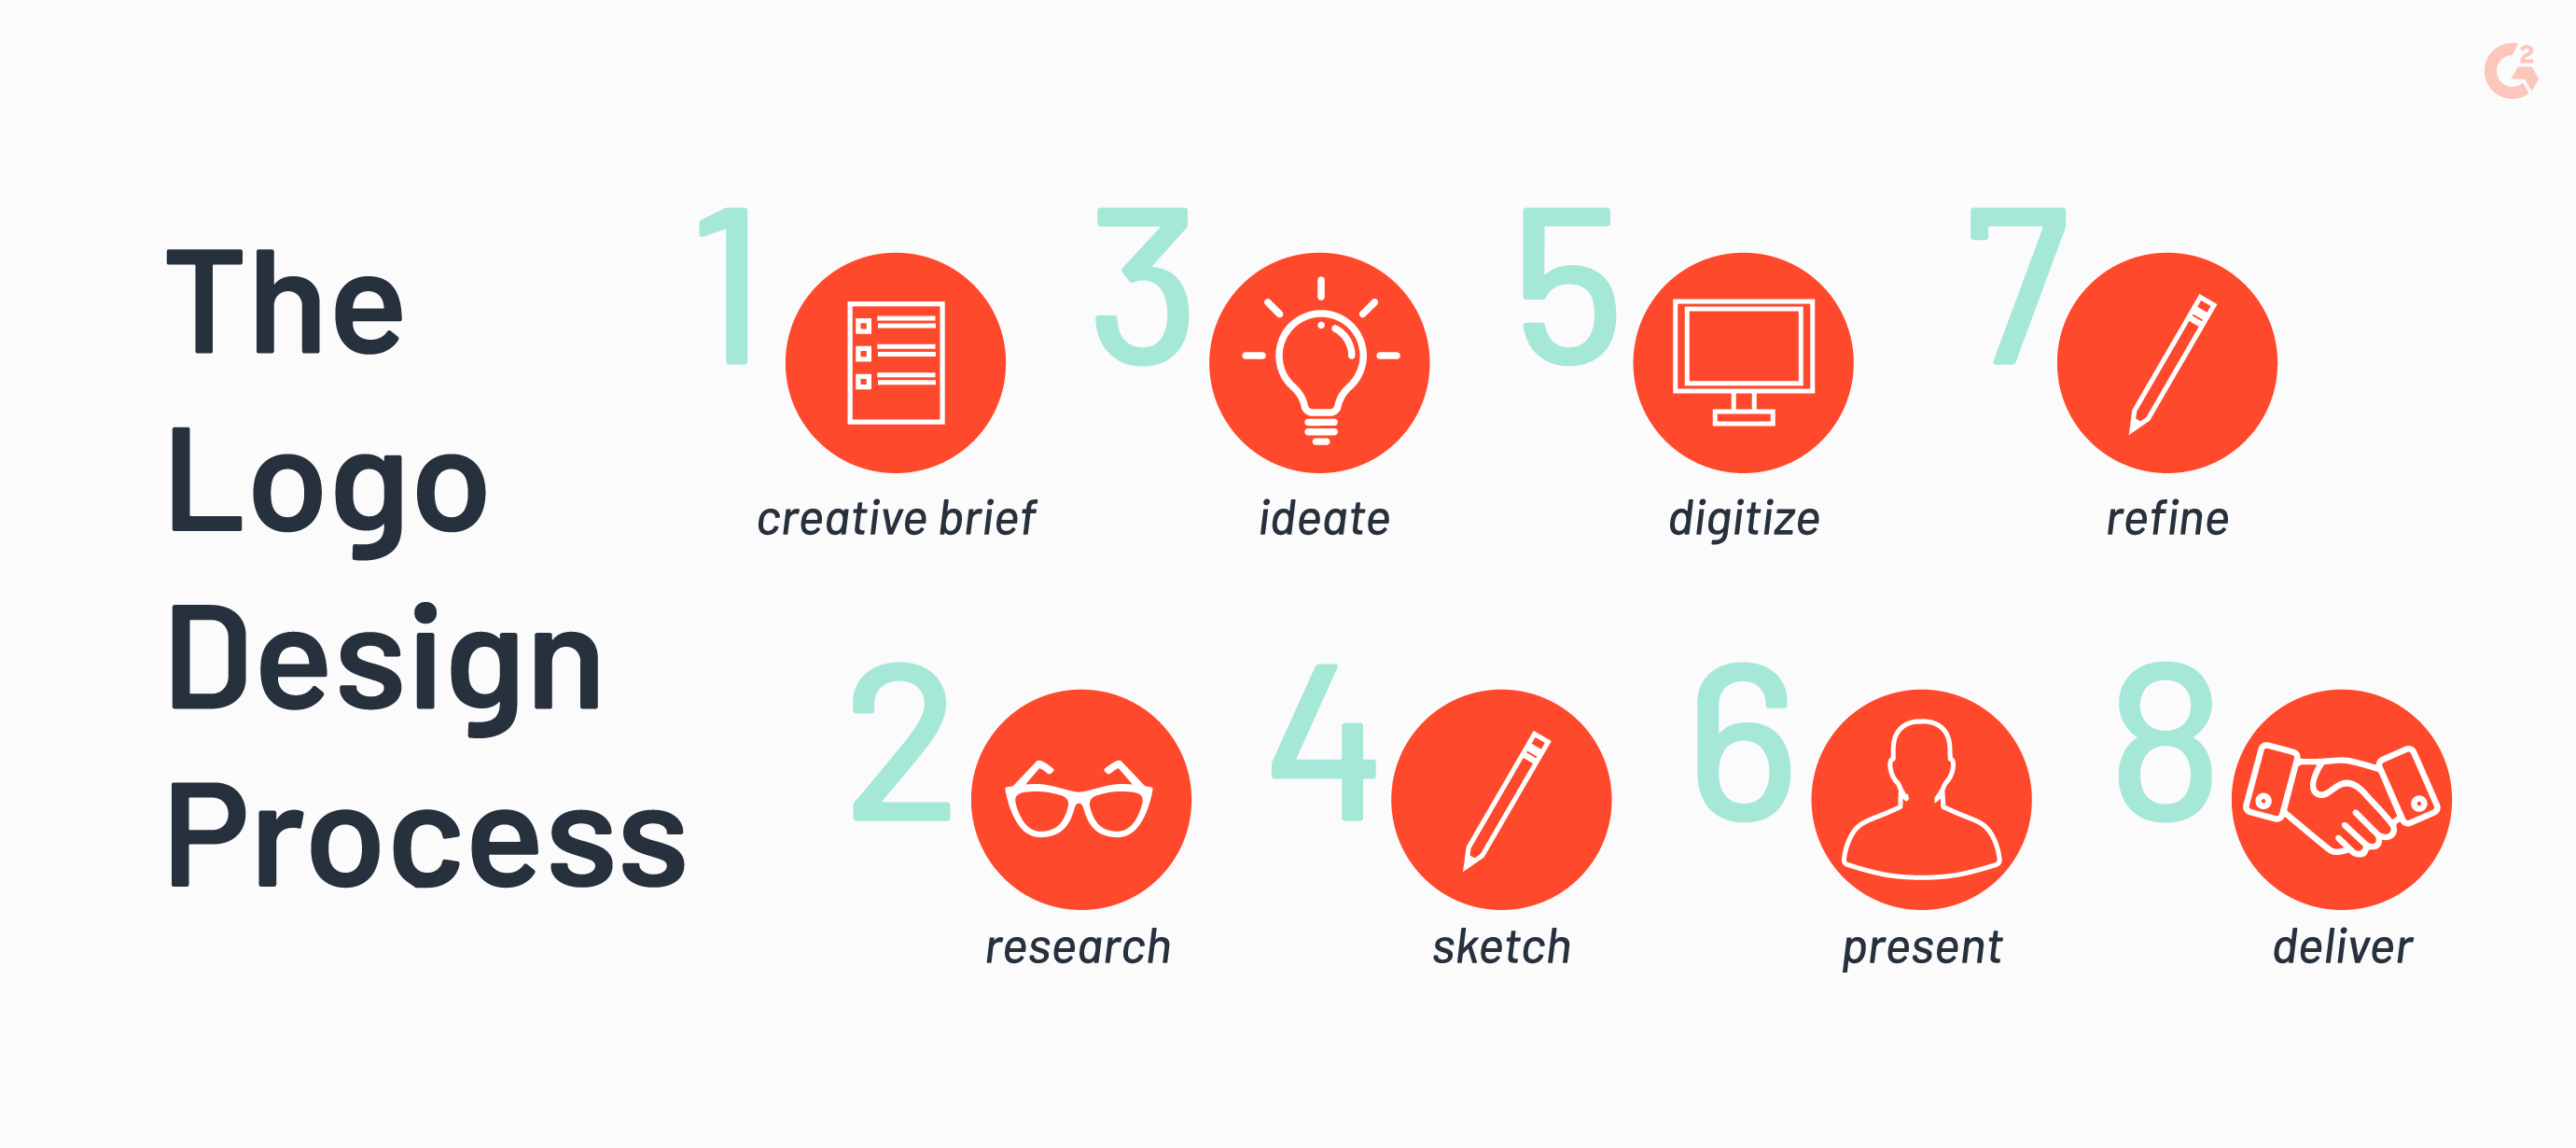 6 Logo Deliverables A Graphic Designer Should Provide | Marketing Tech